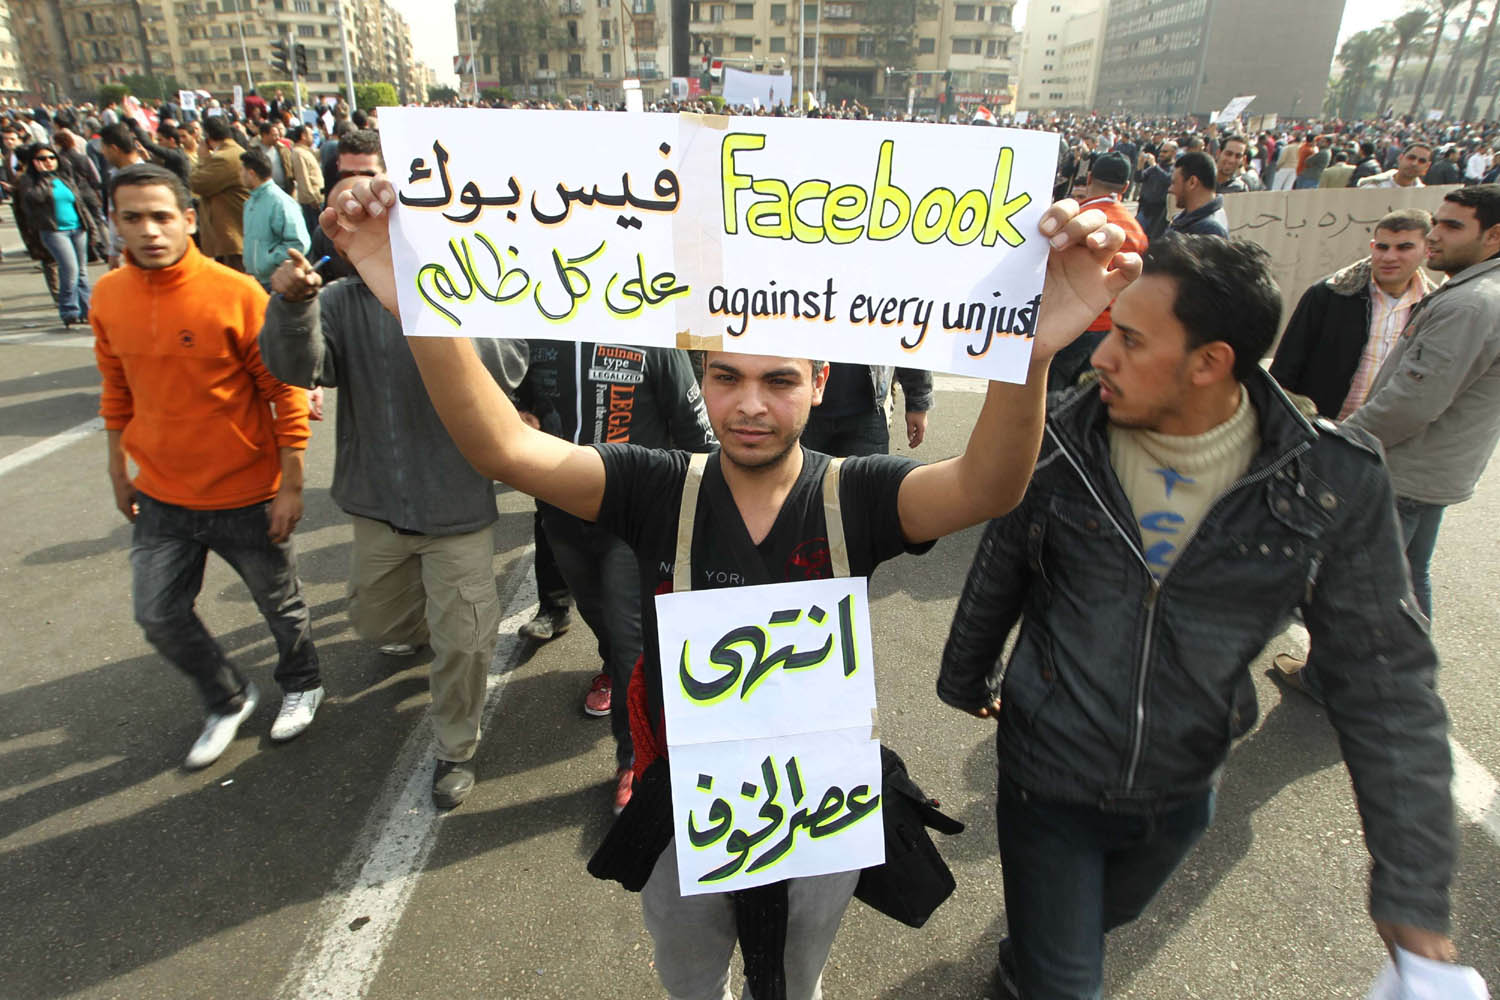 متظاهرون مصريون يرفعون لافتة تشيد بفيسبوك